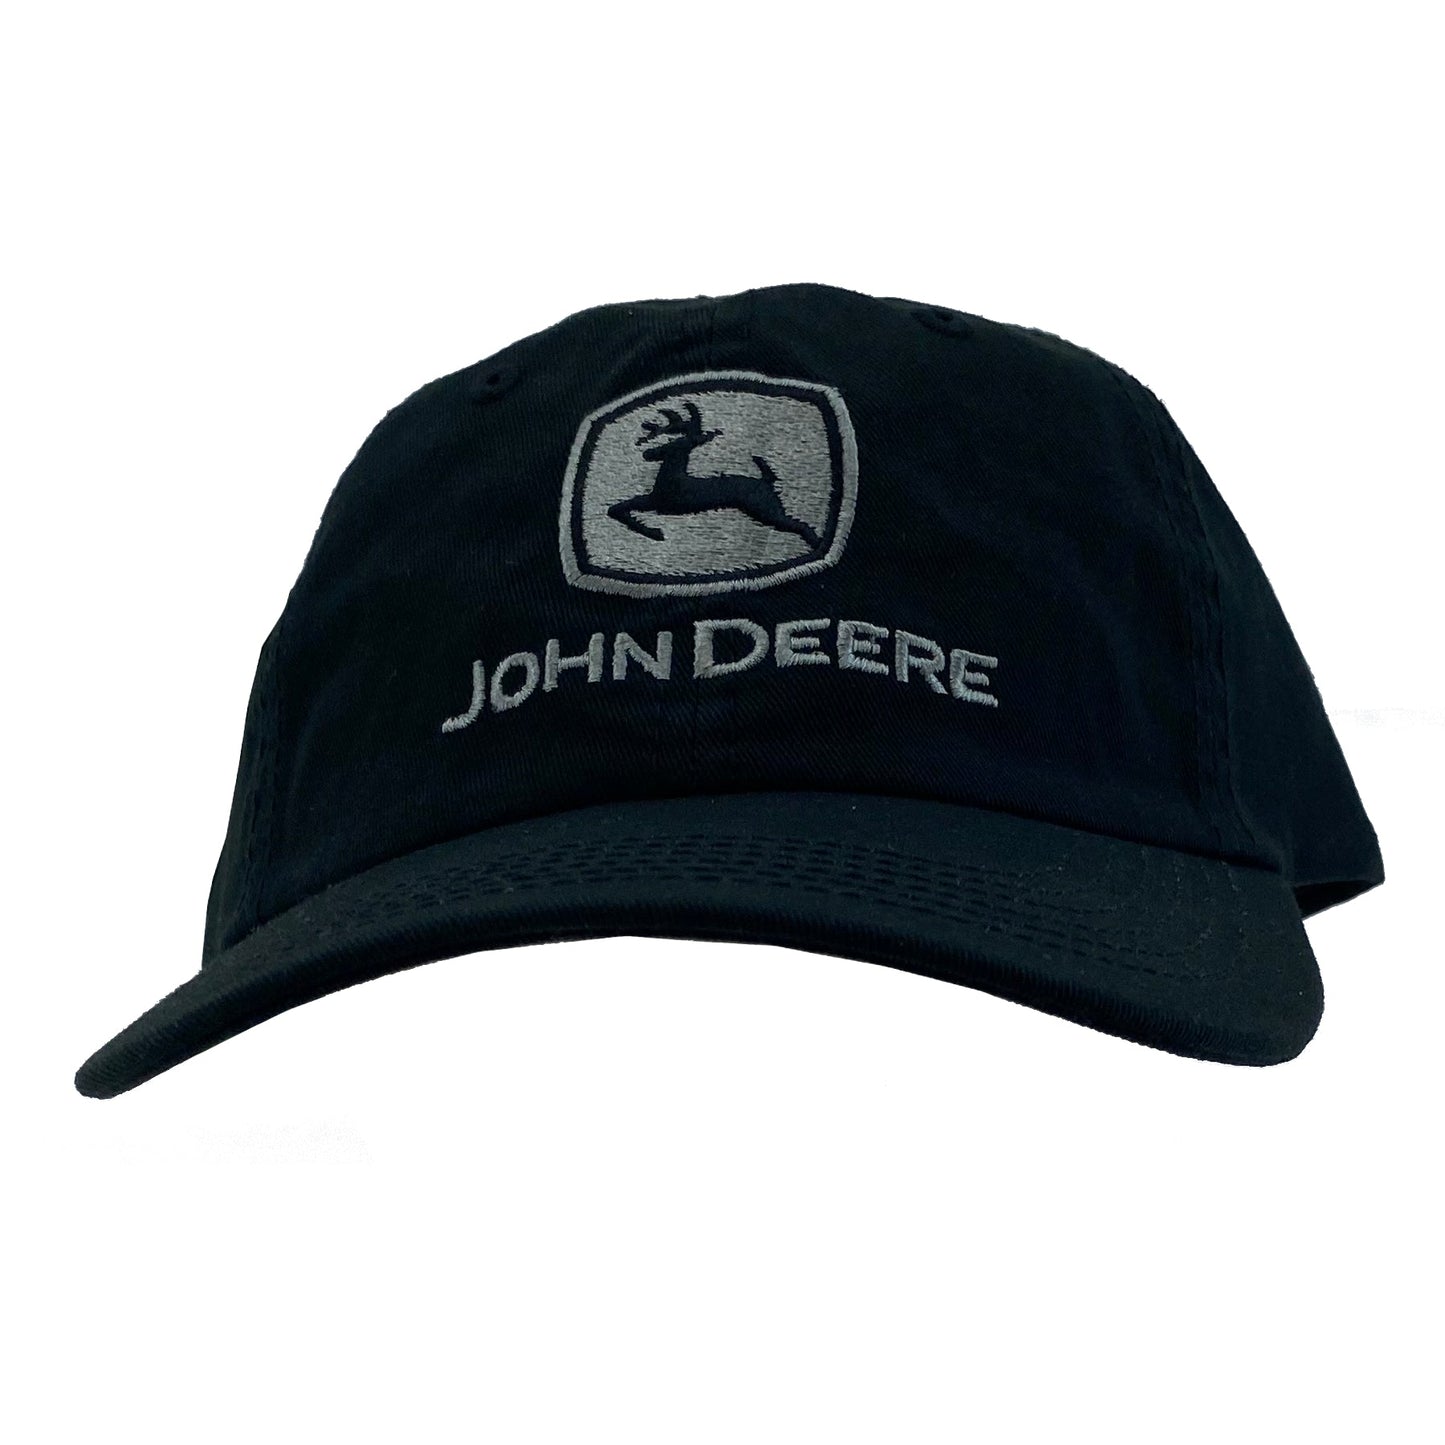 John Deere Unstructured Twill Black Cap - LP70610